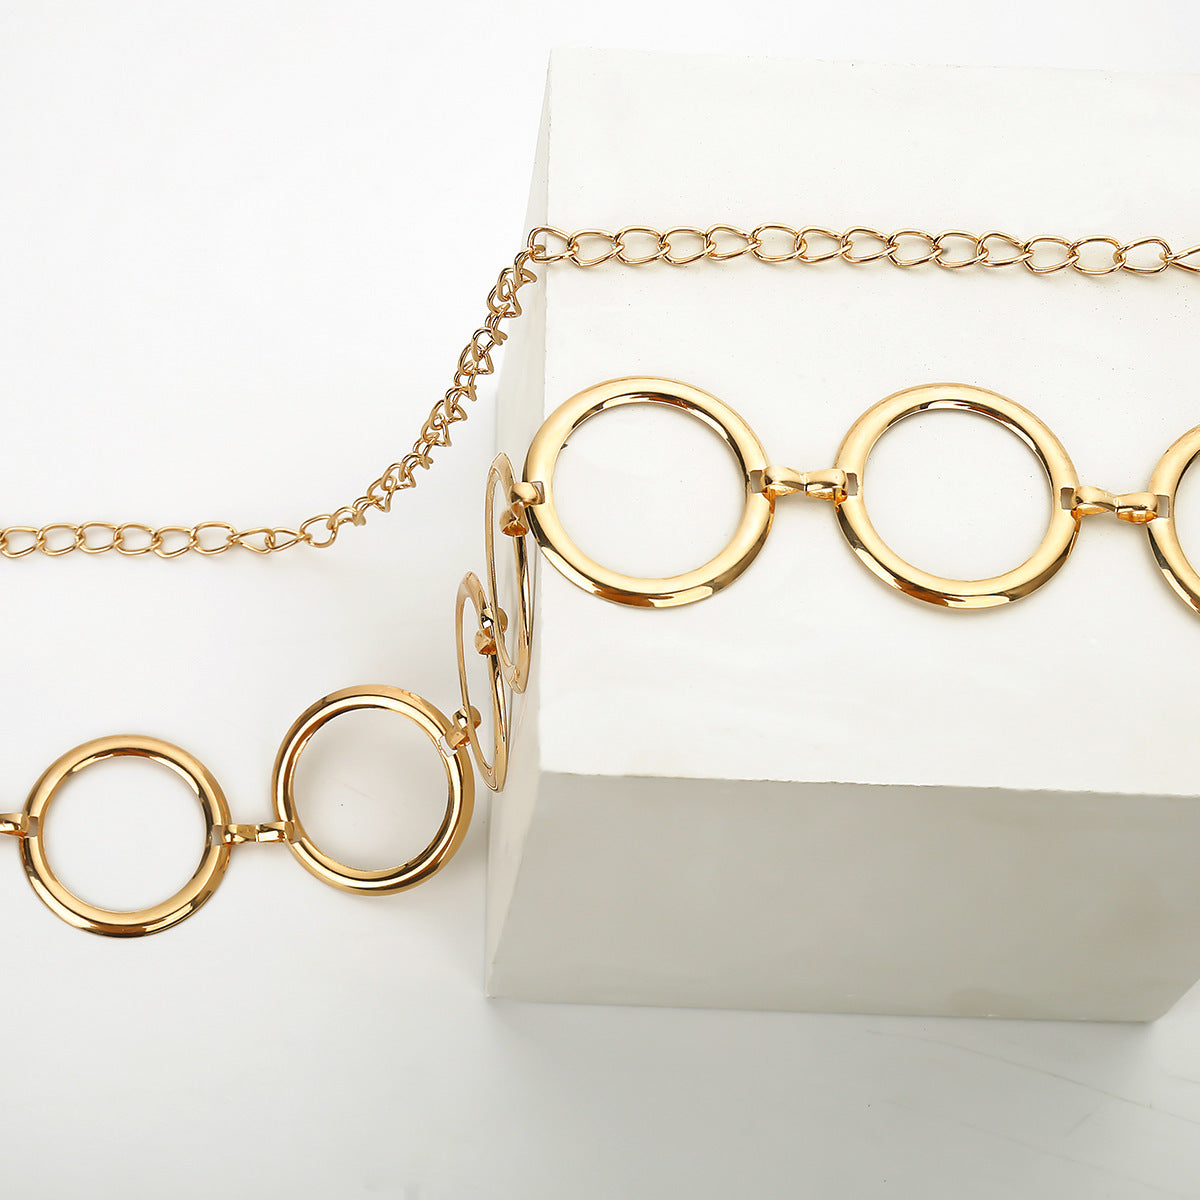 Creative Circular Metal Splicing Body Chain for Women with Unique Design